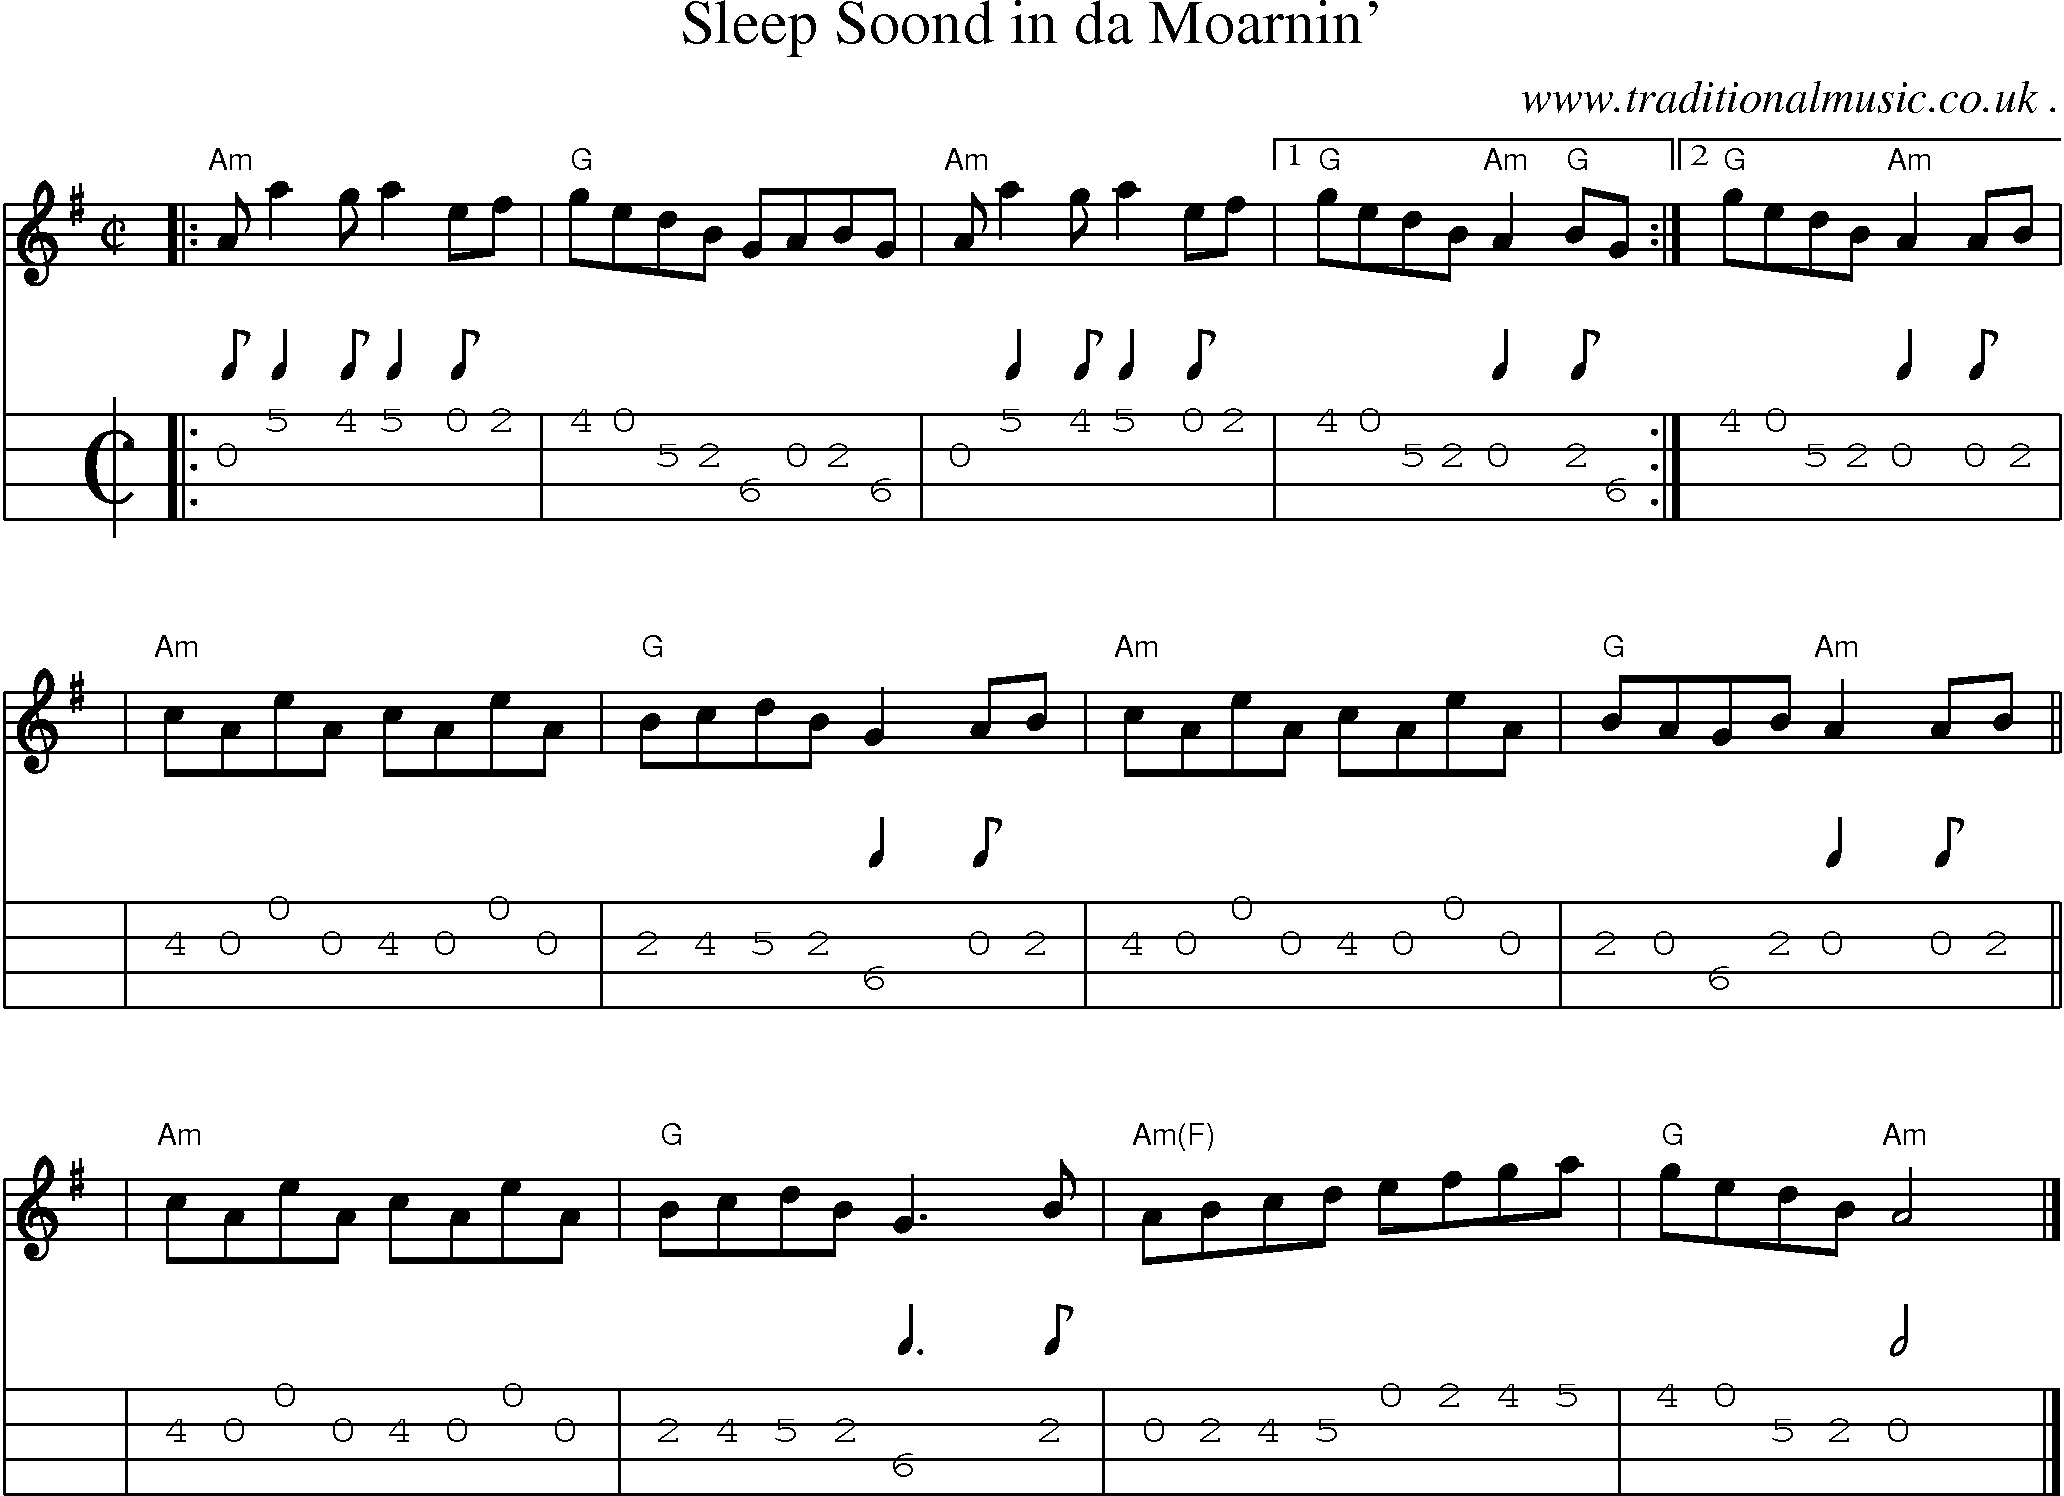 Sheet-music  score, Chords and Mandolin Tabs for Sleep Soond In Da Moarnin